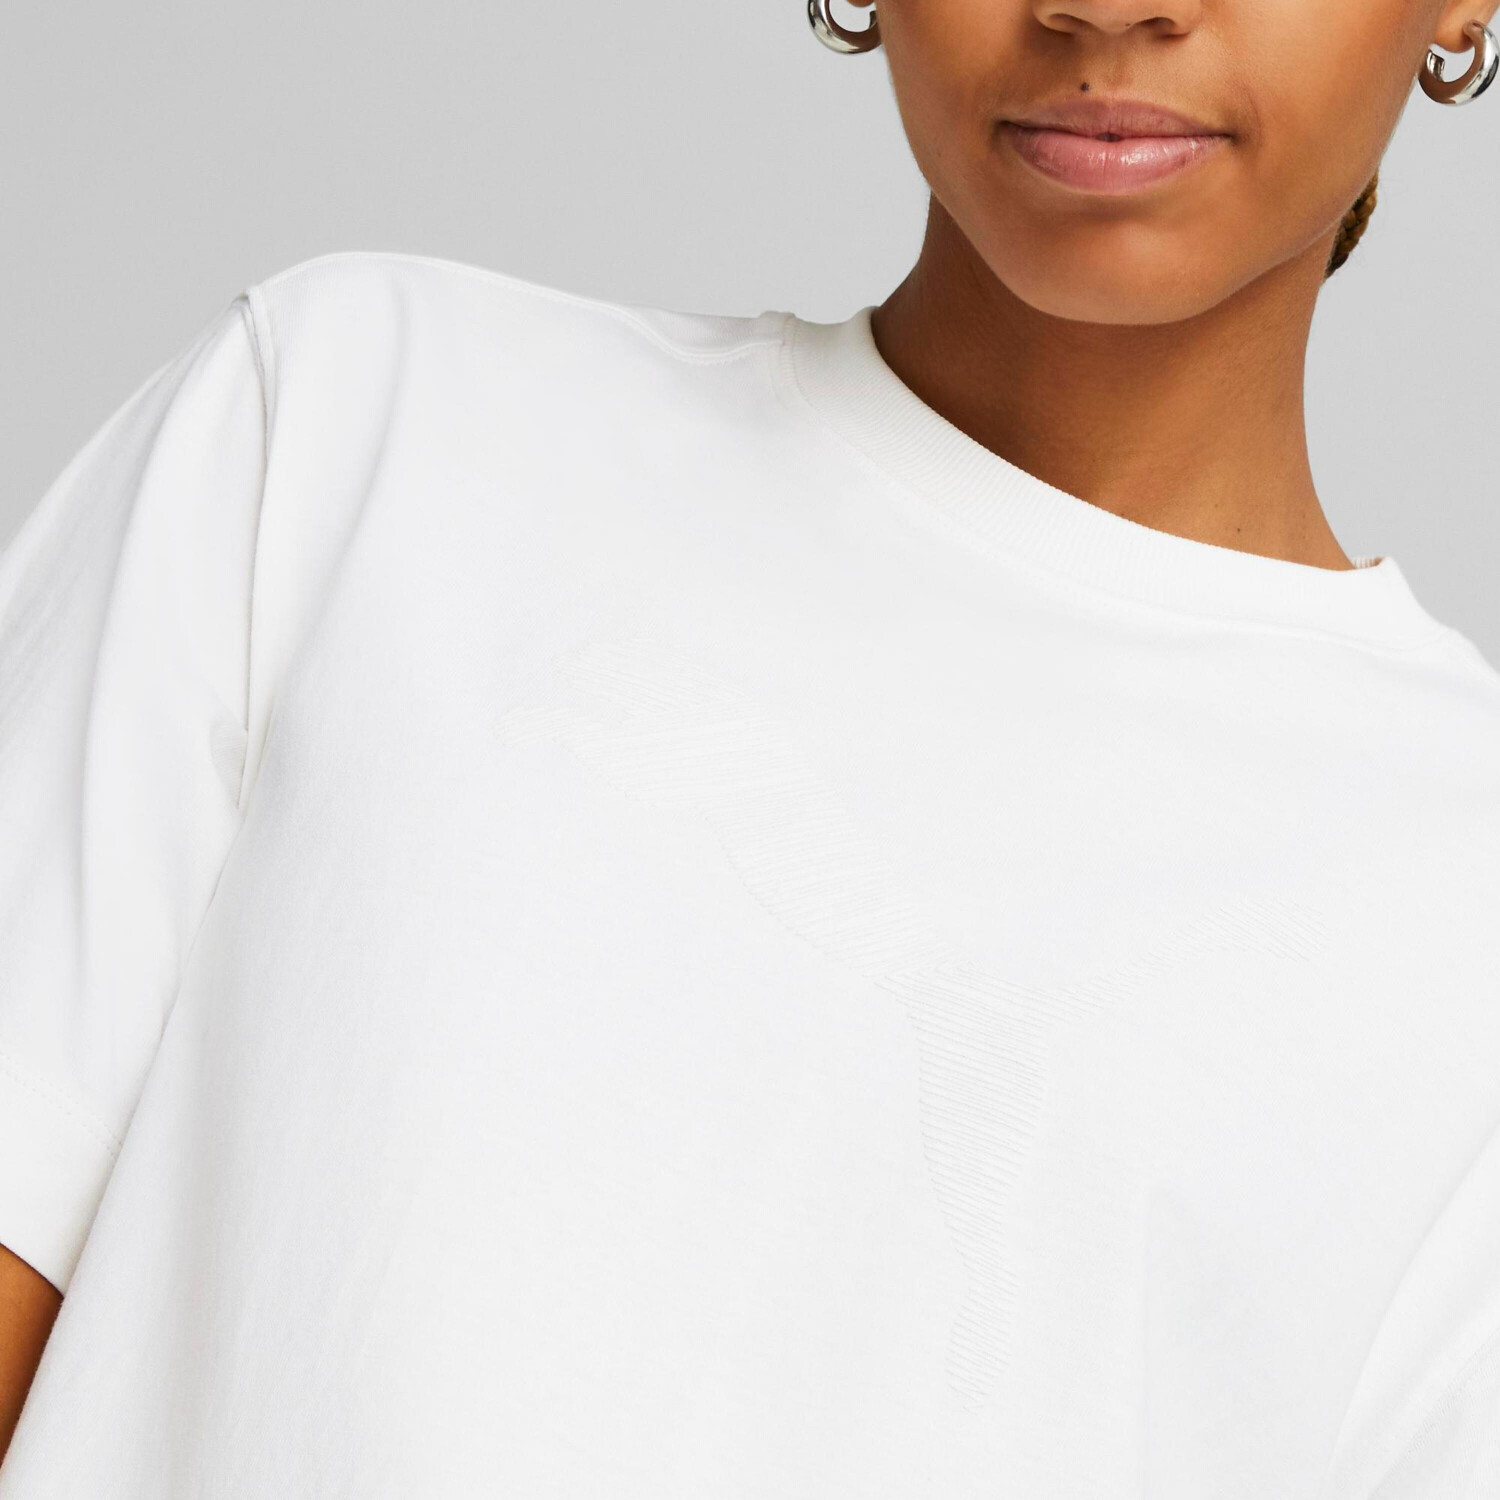 T-Shirt white | HER 17,99 ab Puma € (673107) Damen Preisvergleich bei